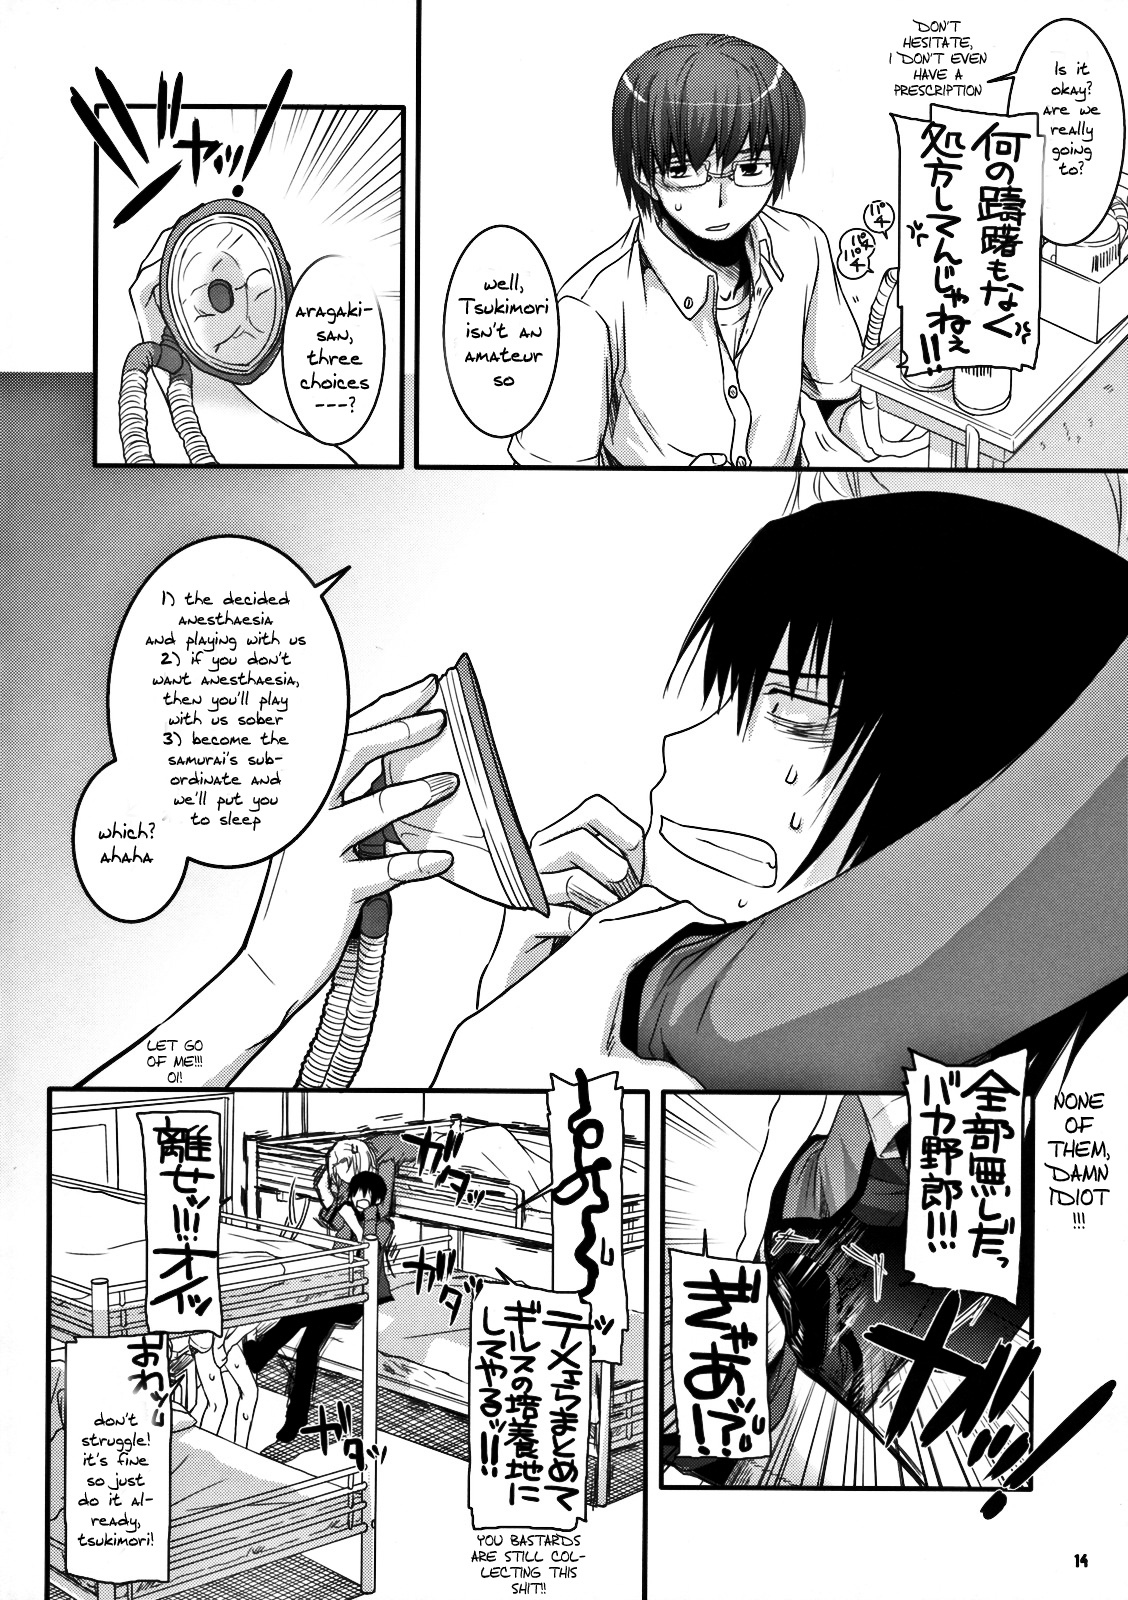 Passion of Aragaki Shuya Ch 2 - Reuploaded page 13 full